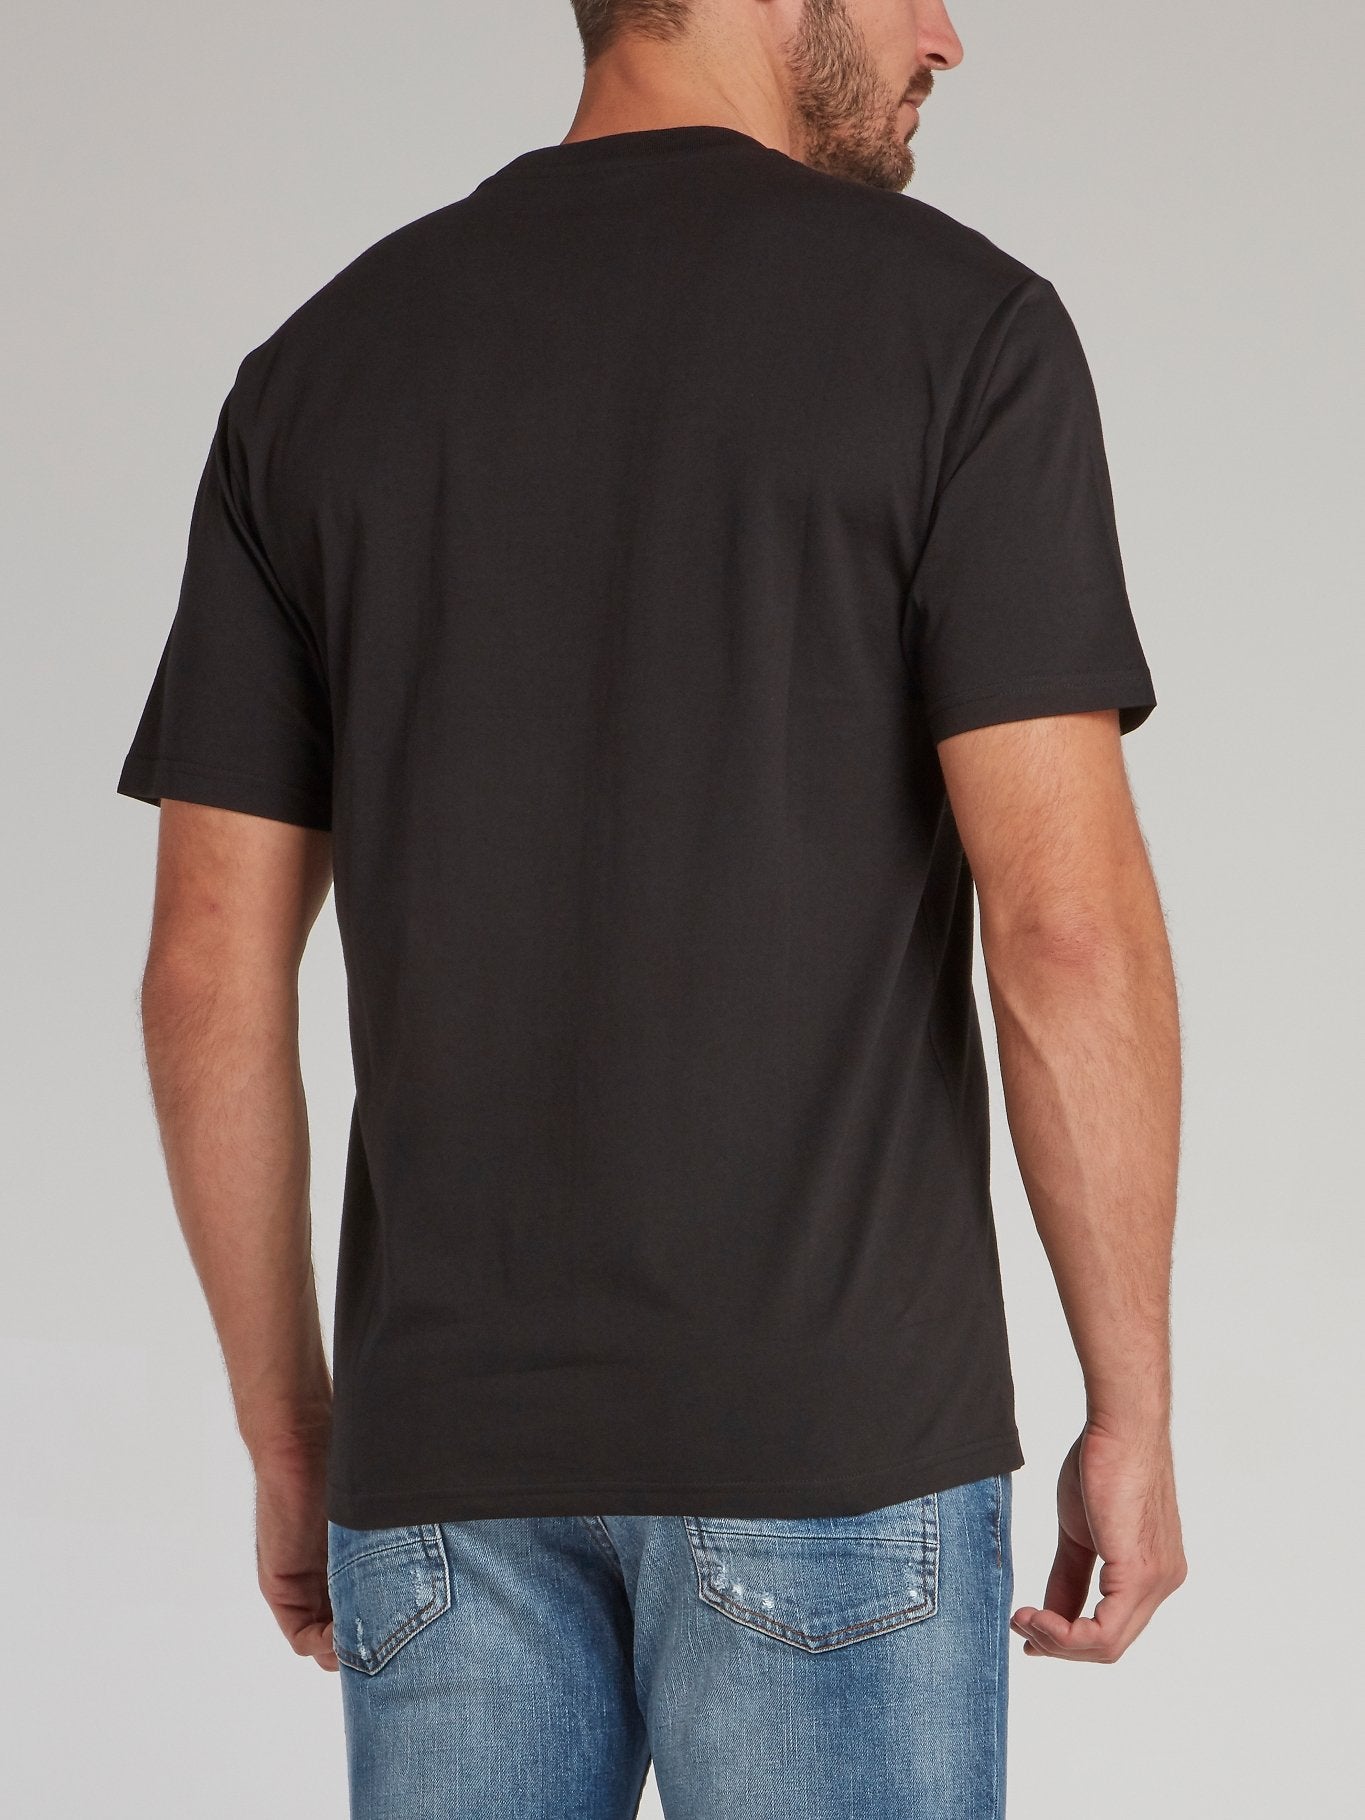 Black Lion Head Print T-Shirt